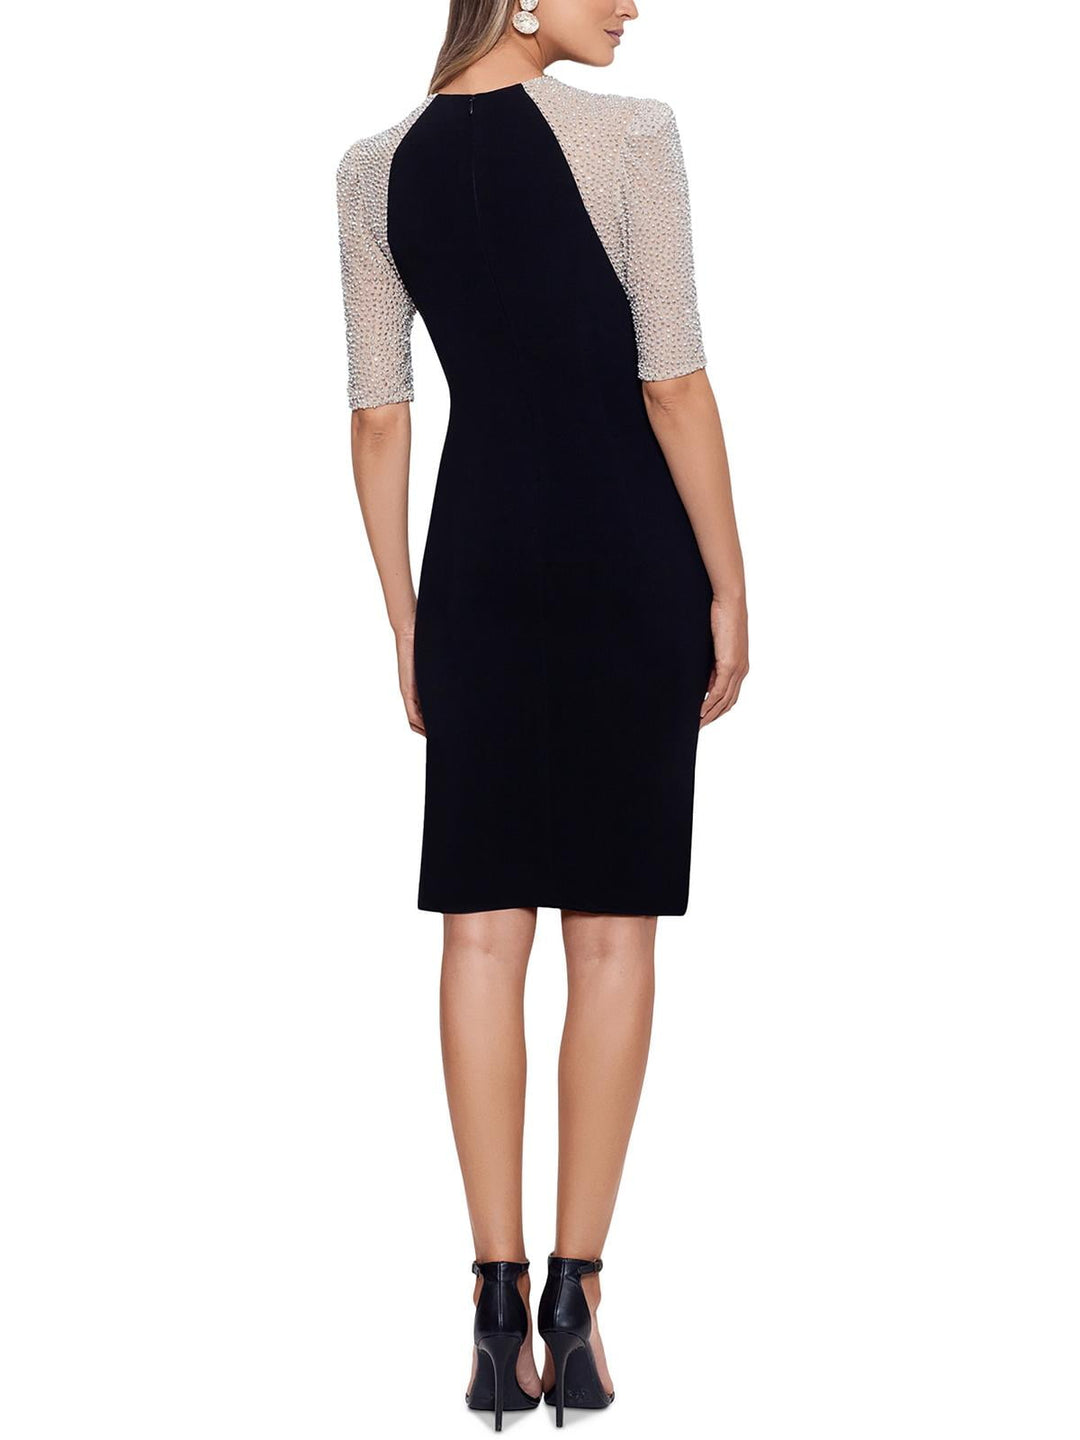 XSCAPE Women's Rhinestone Illusion Sheath Dress Black Size 14